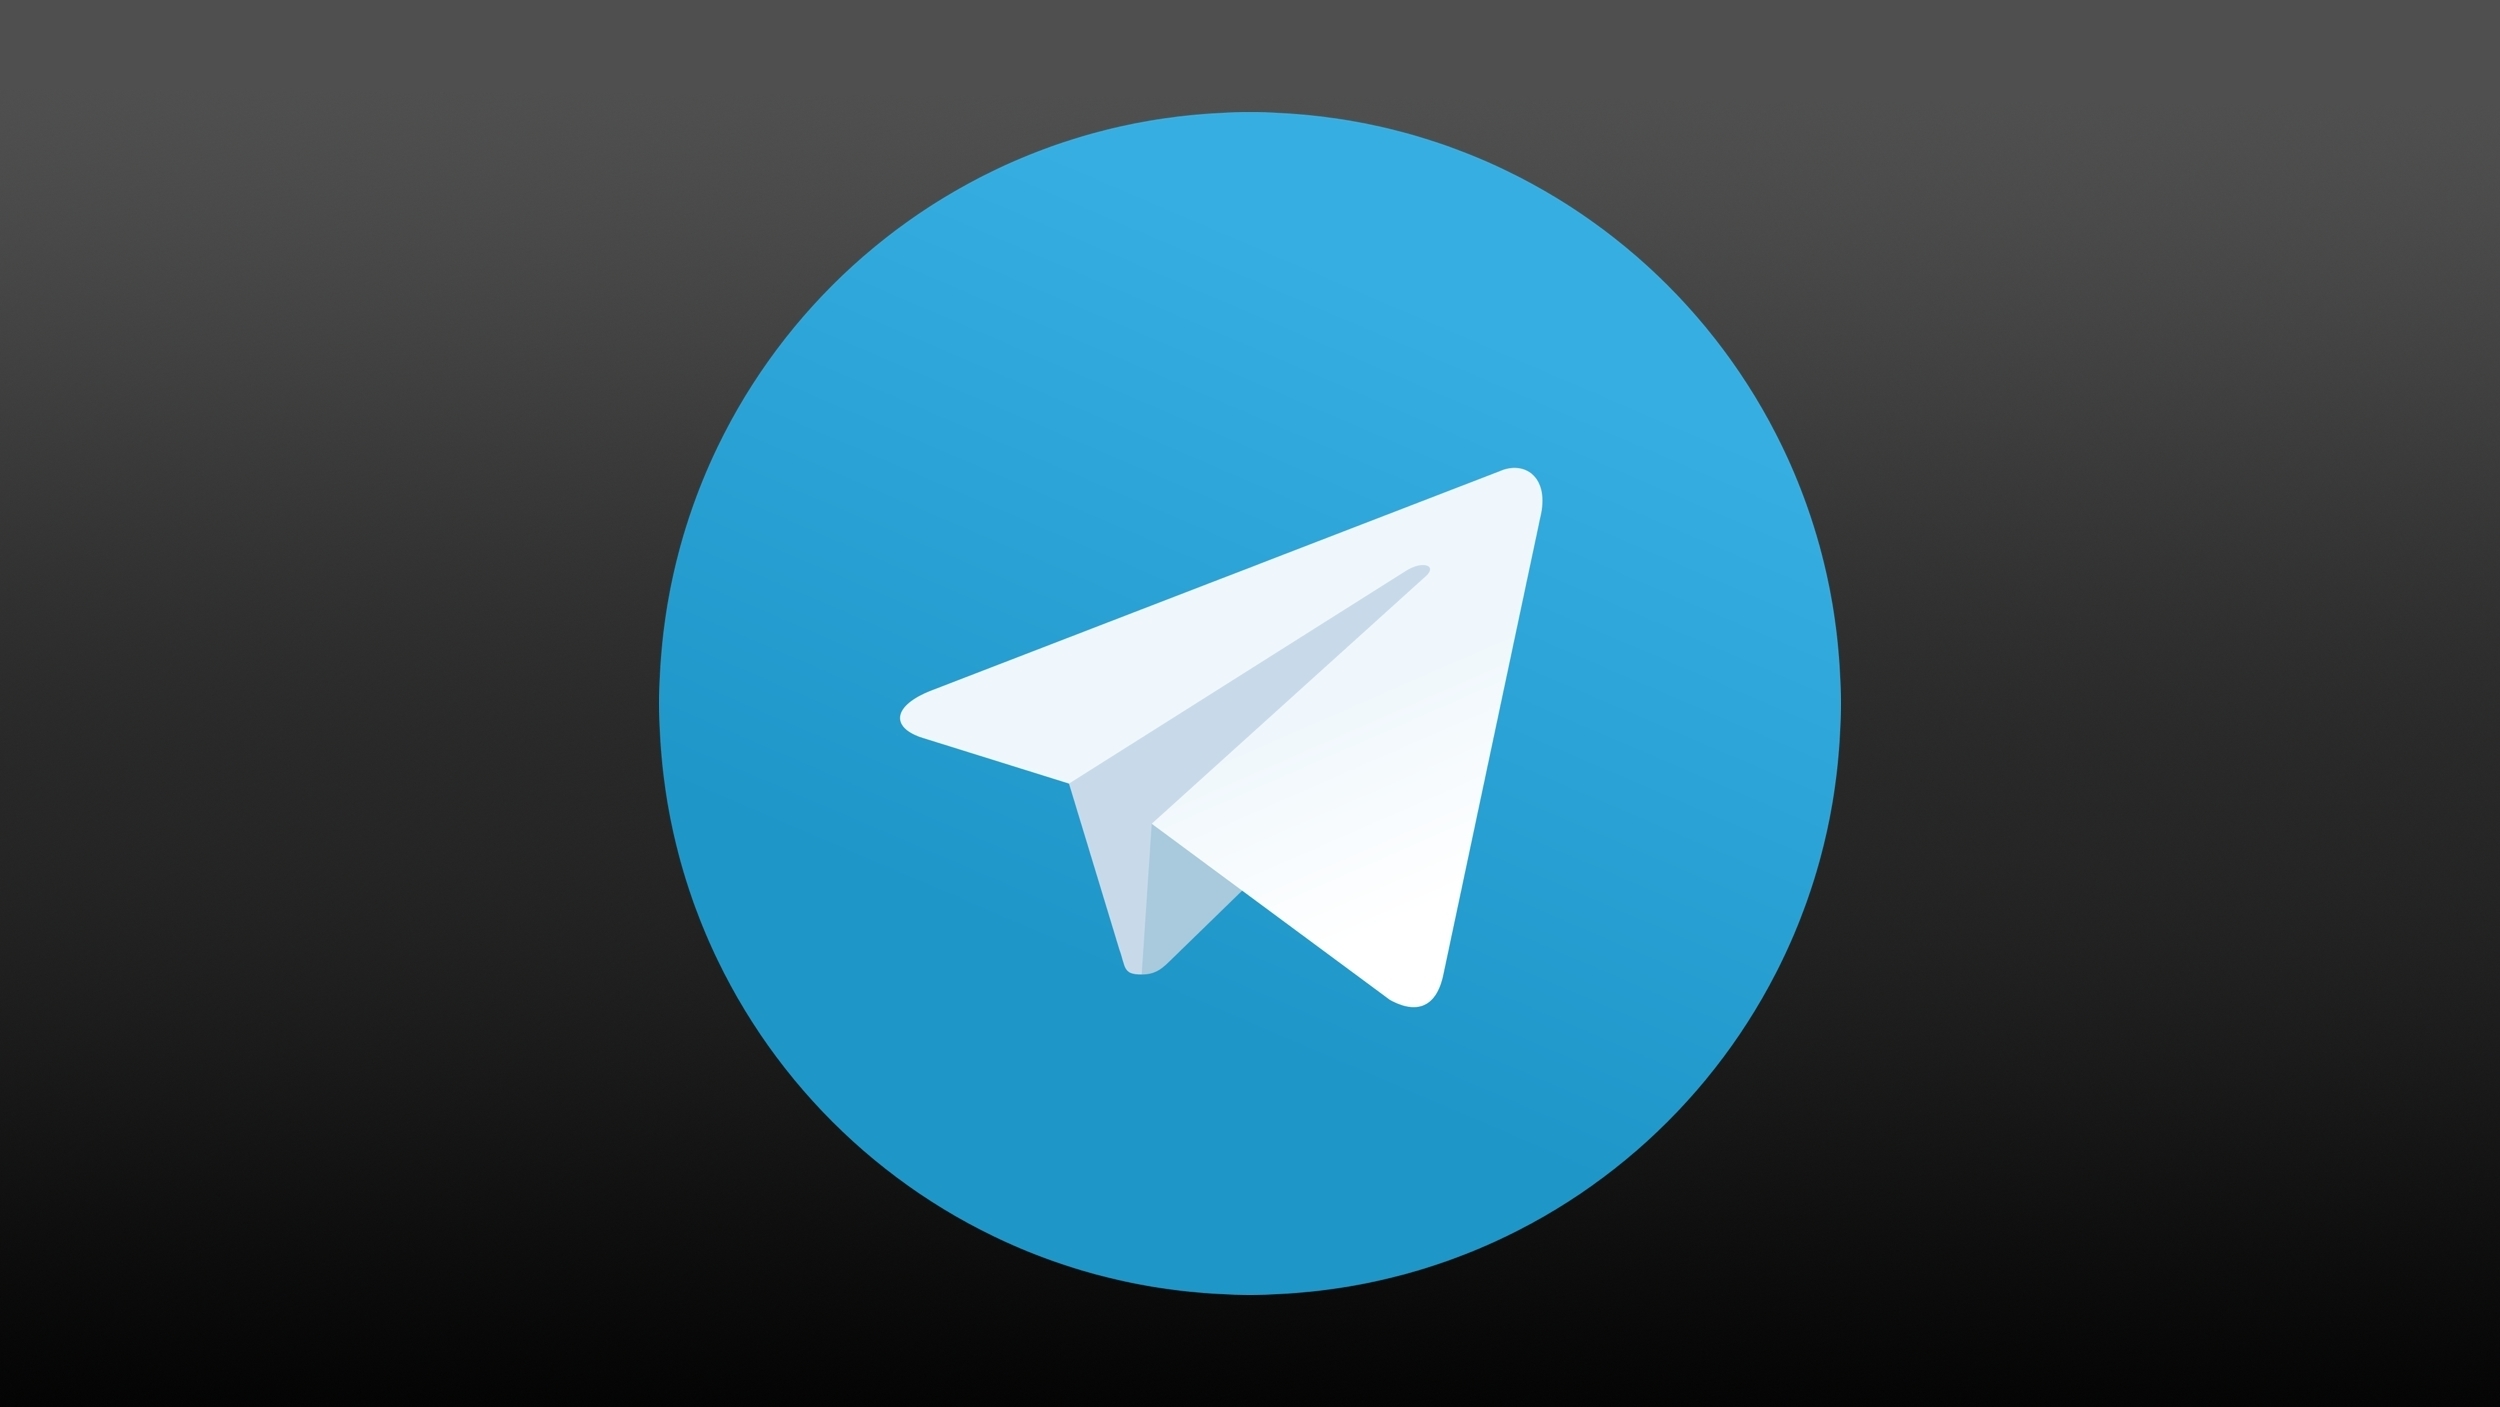 Картинка телеграм. Телеграм лого. Иконка телеграмм. Игры в телеграмме. Значок мессенджера телеграмм.